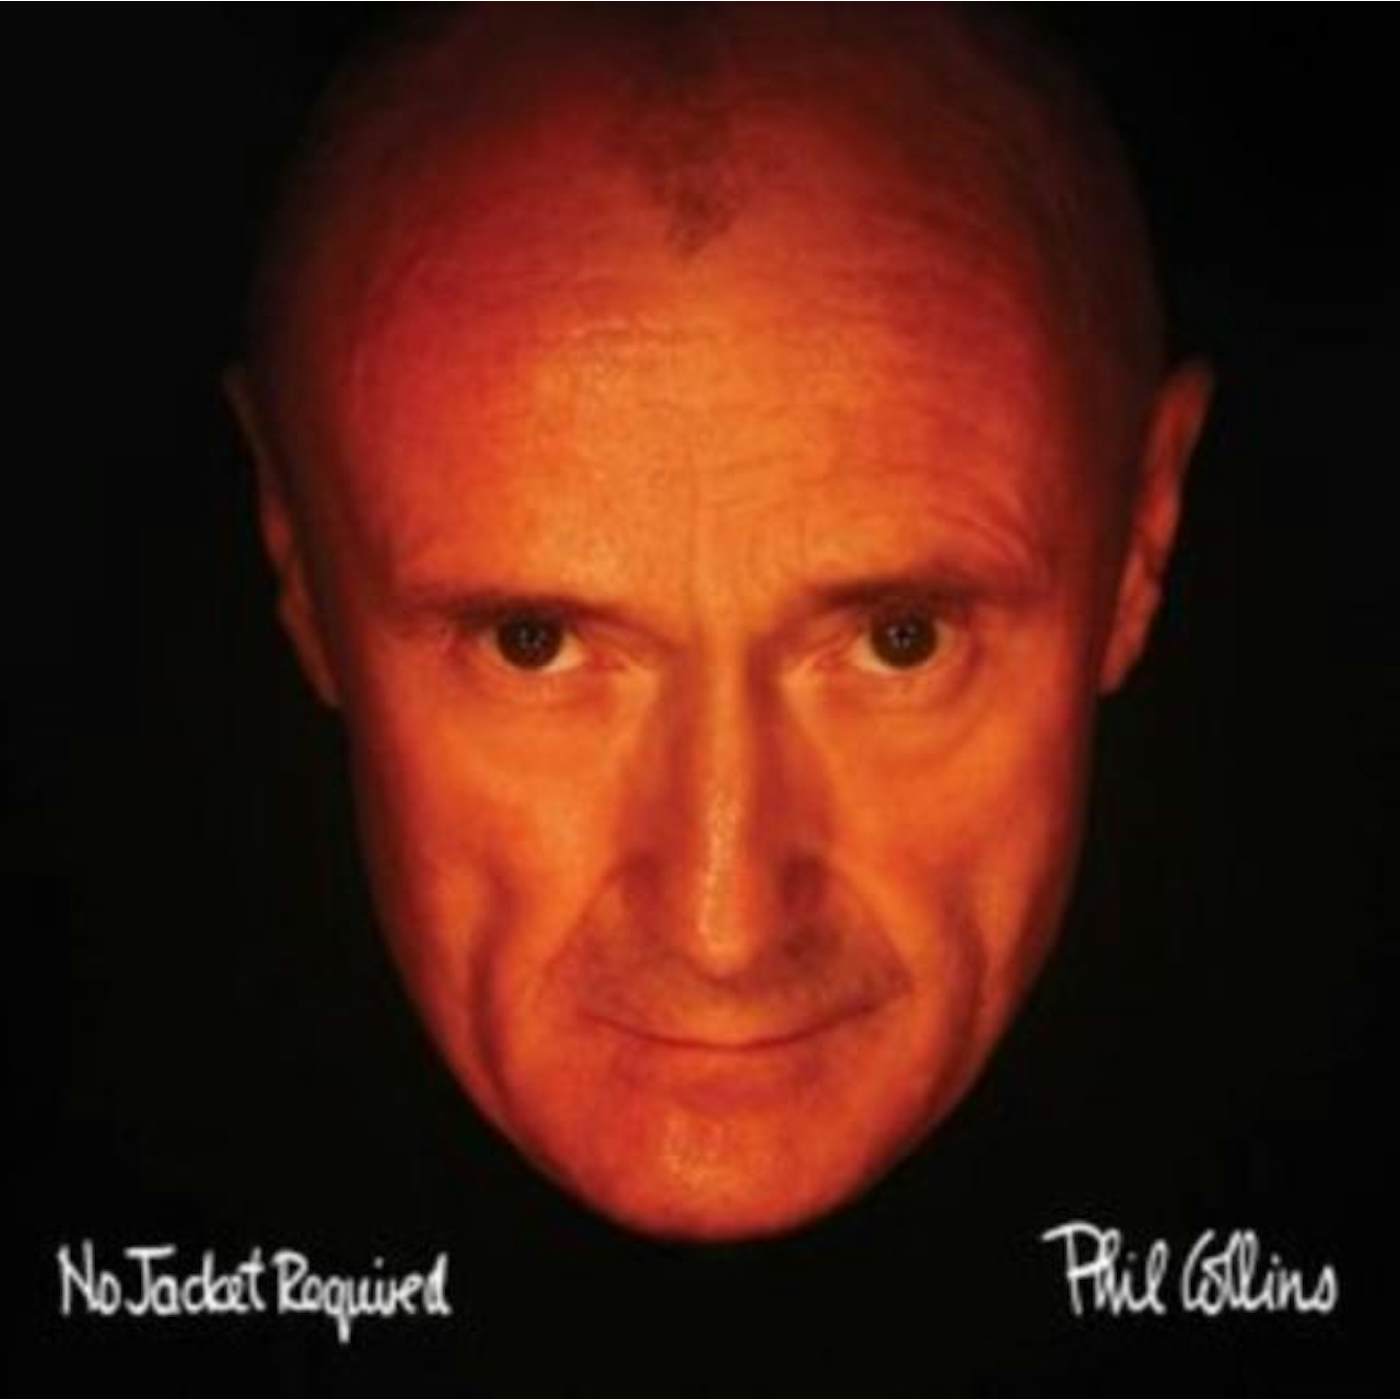 Phil Collins LP Vinyl Record - No Jacket Required